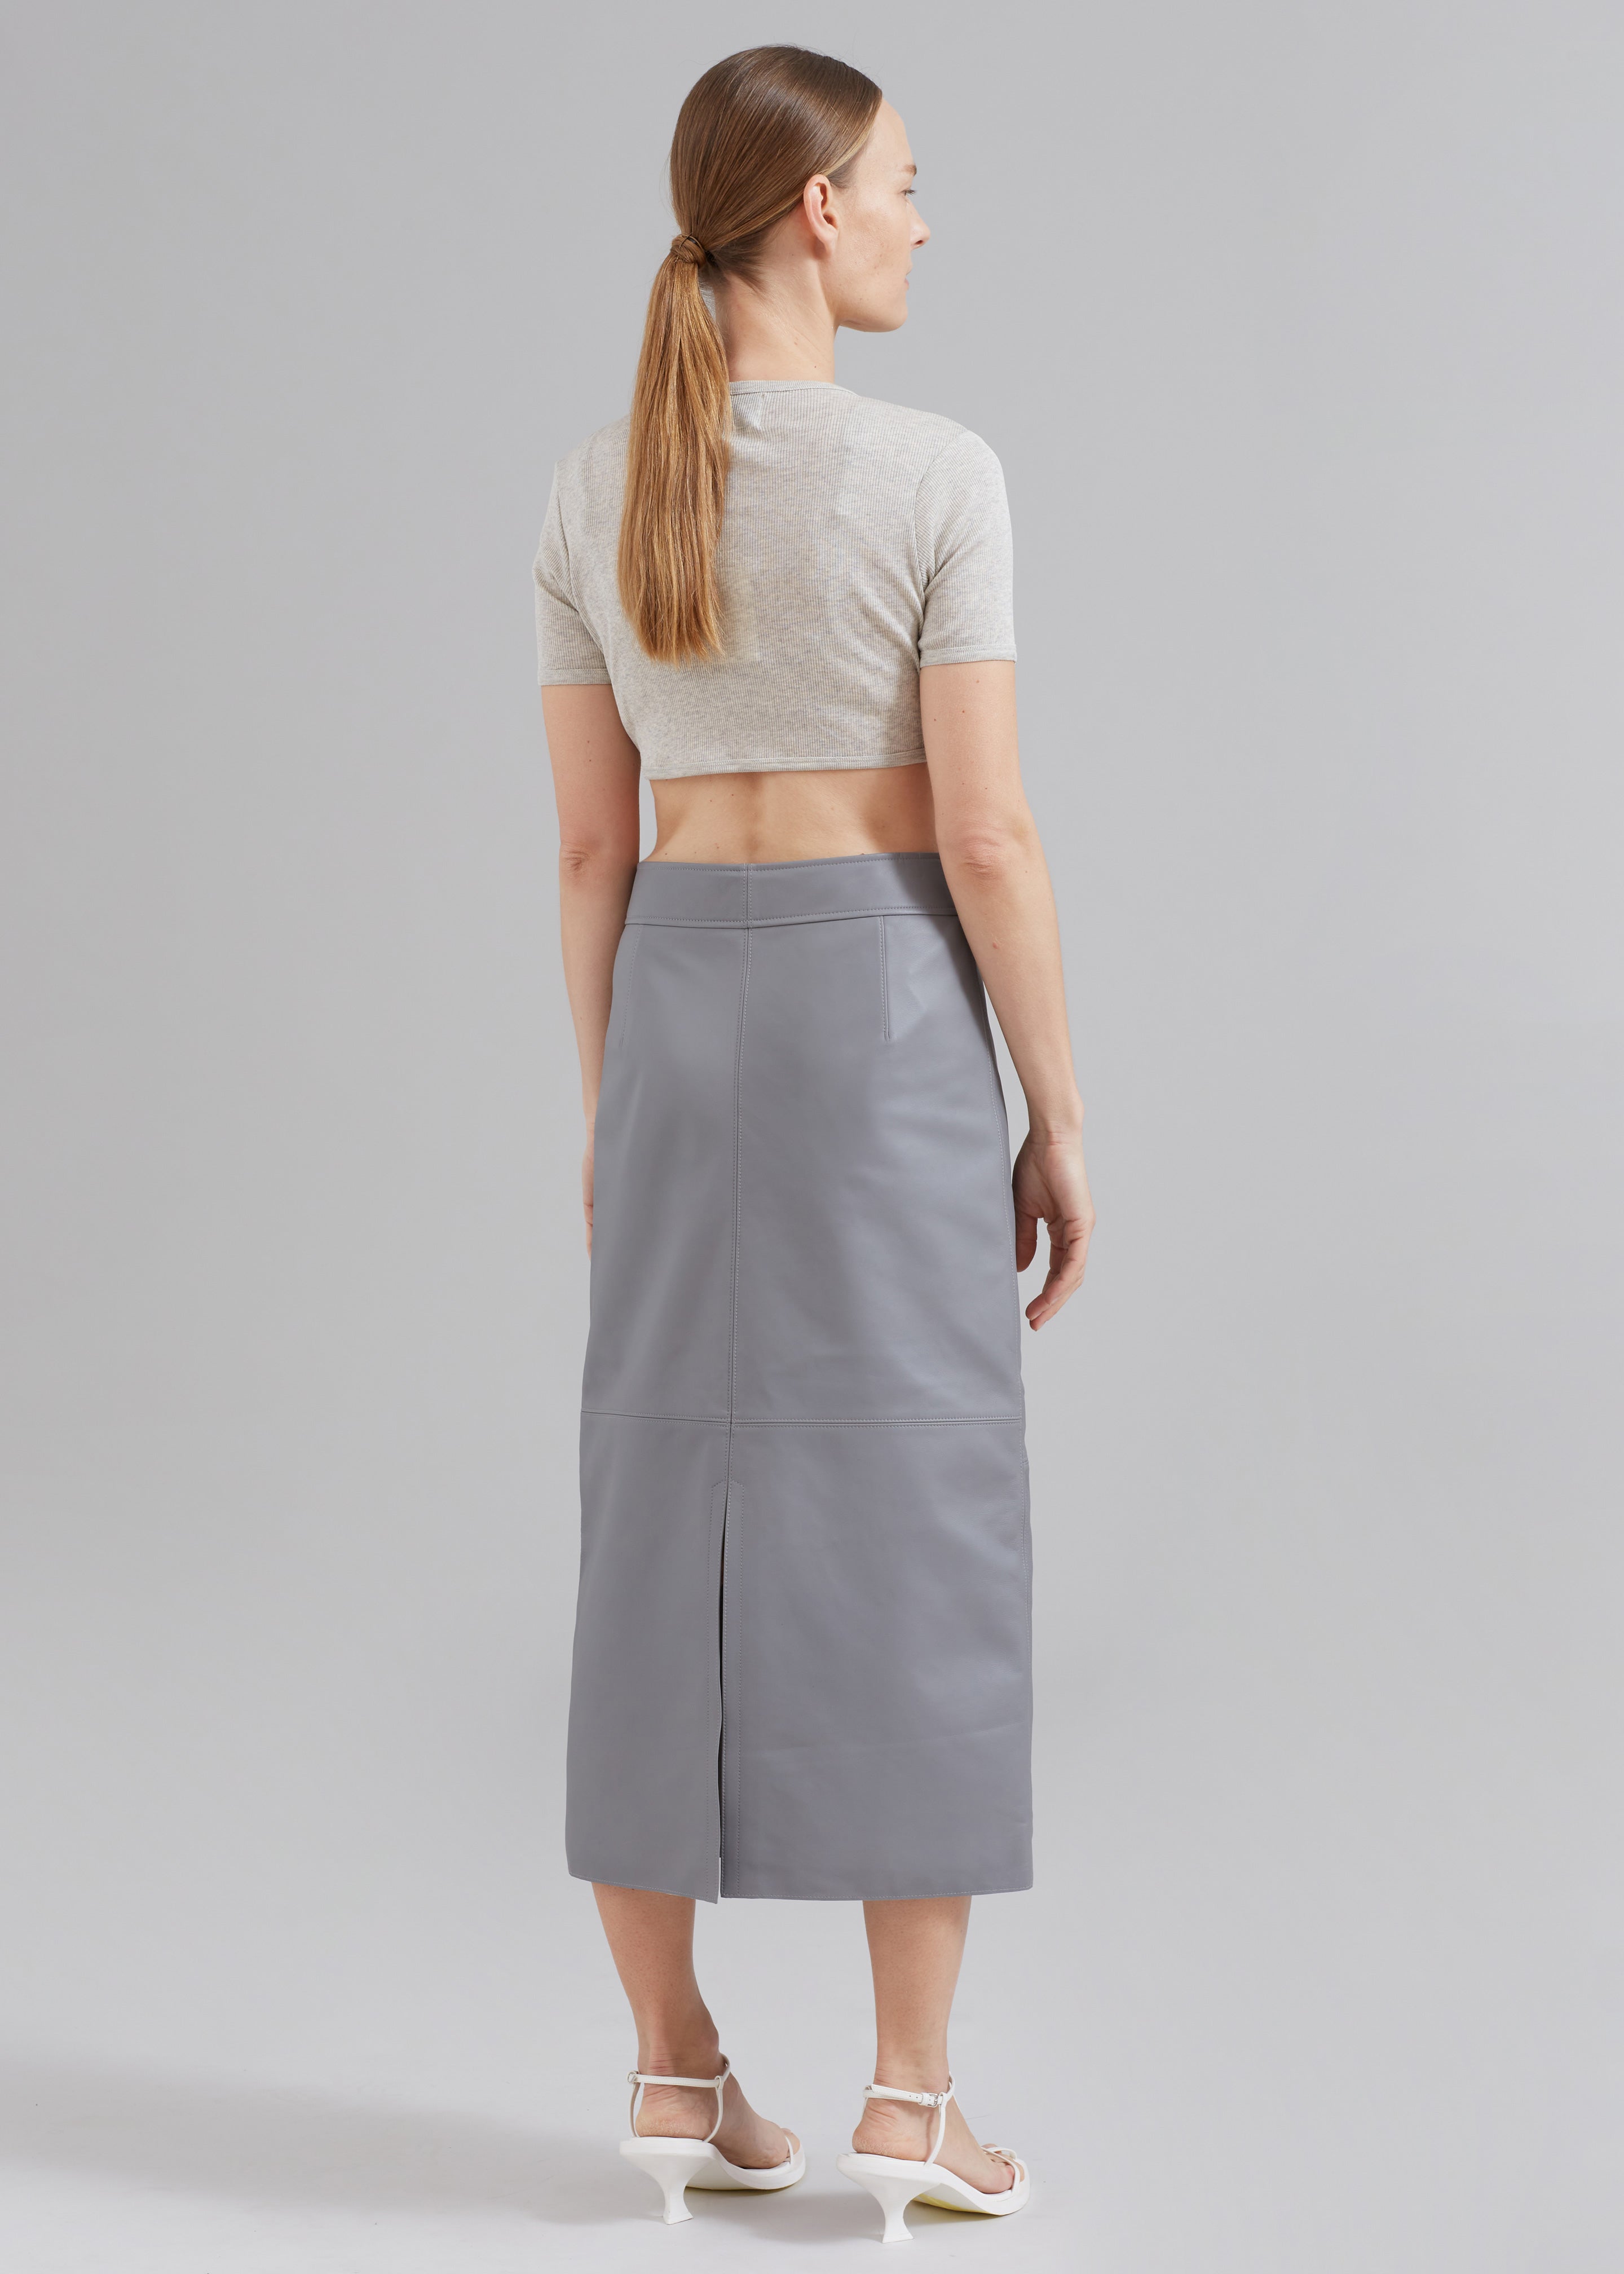 Heather Leather Pencil Skirt - Grey - 8